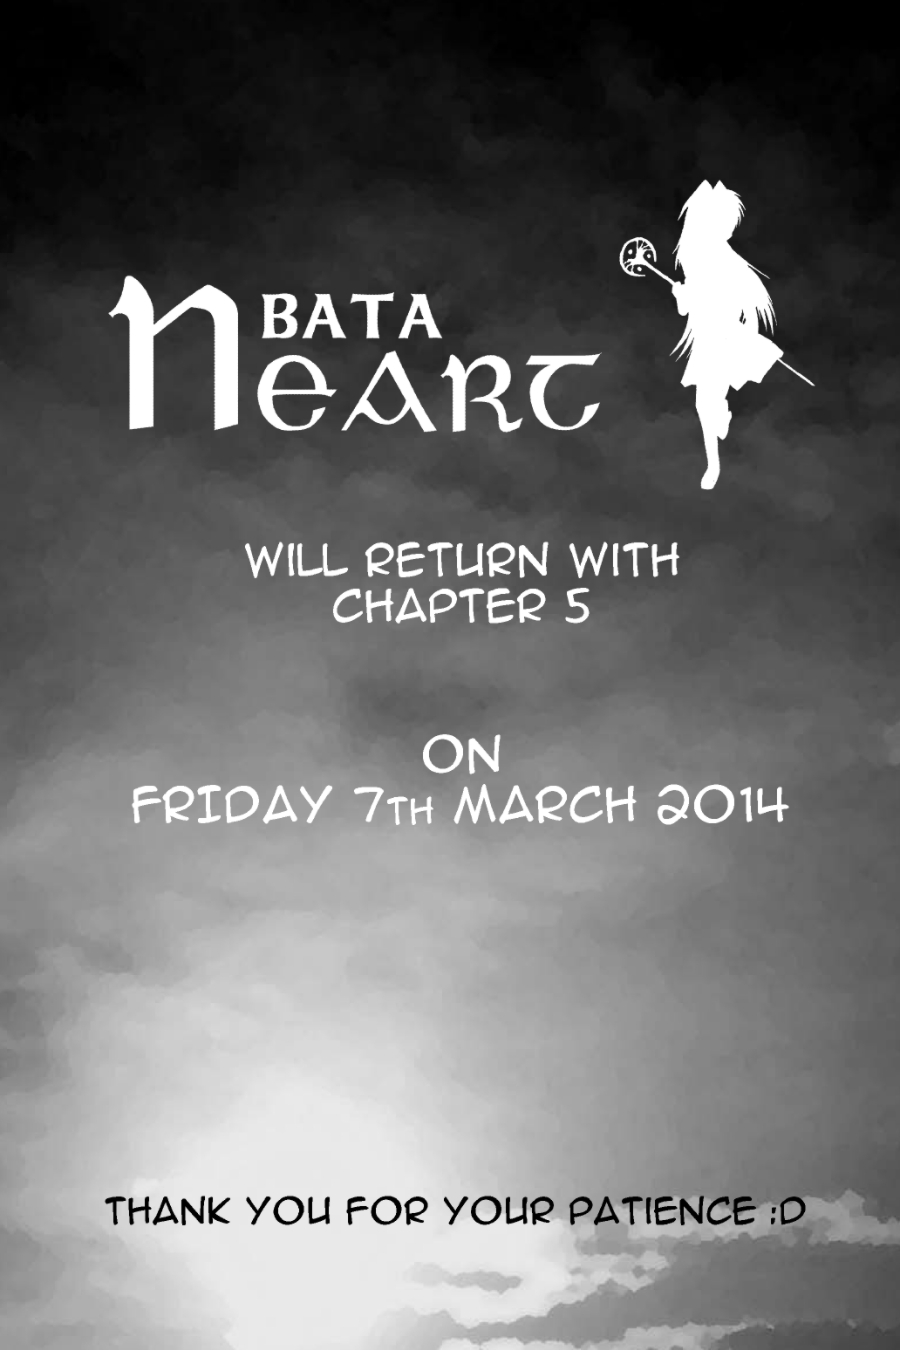 Bata Neart Chapter 5 coming soon